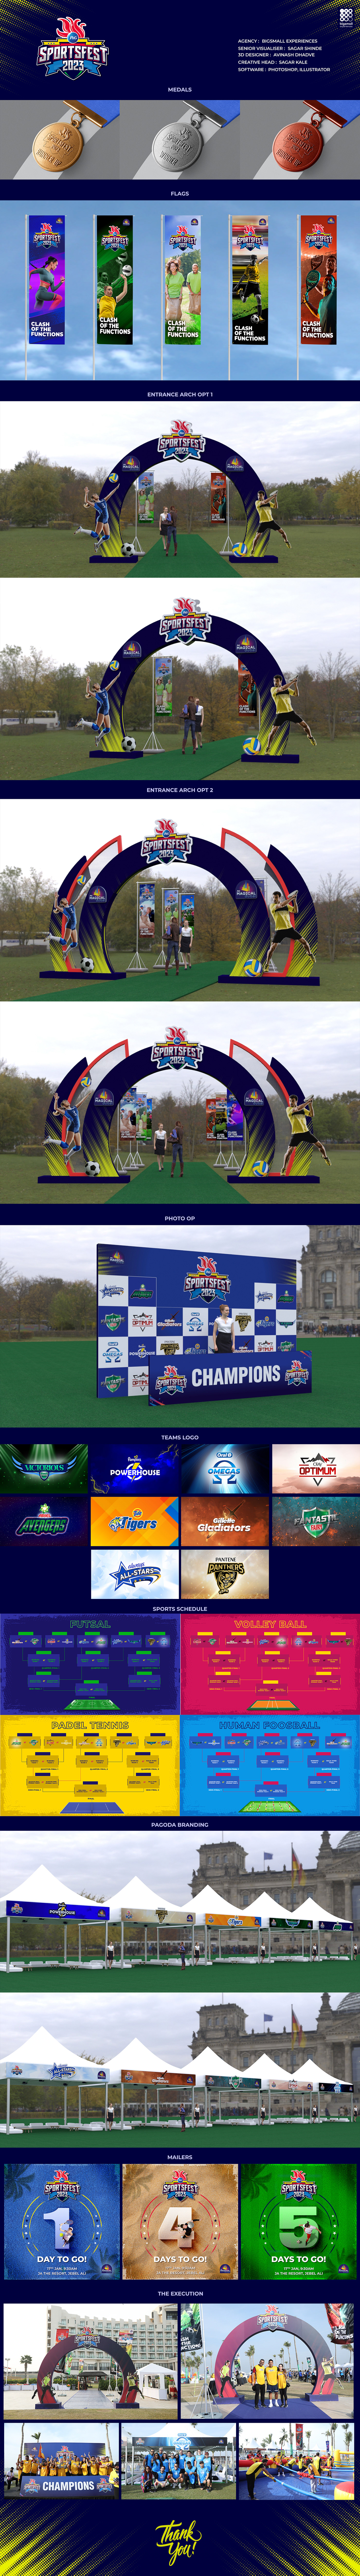 3D design designer designs Event graphic Sports Design Theme